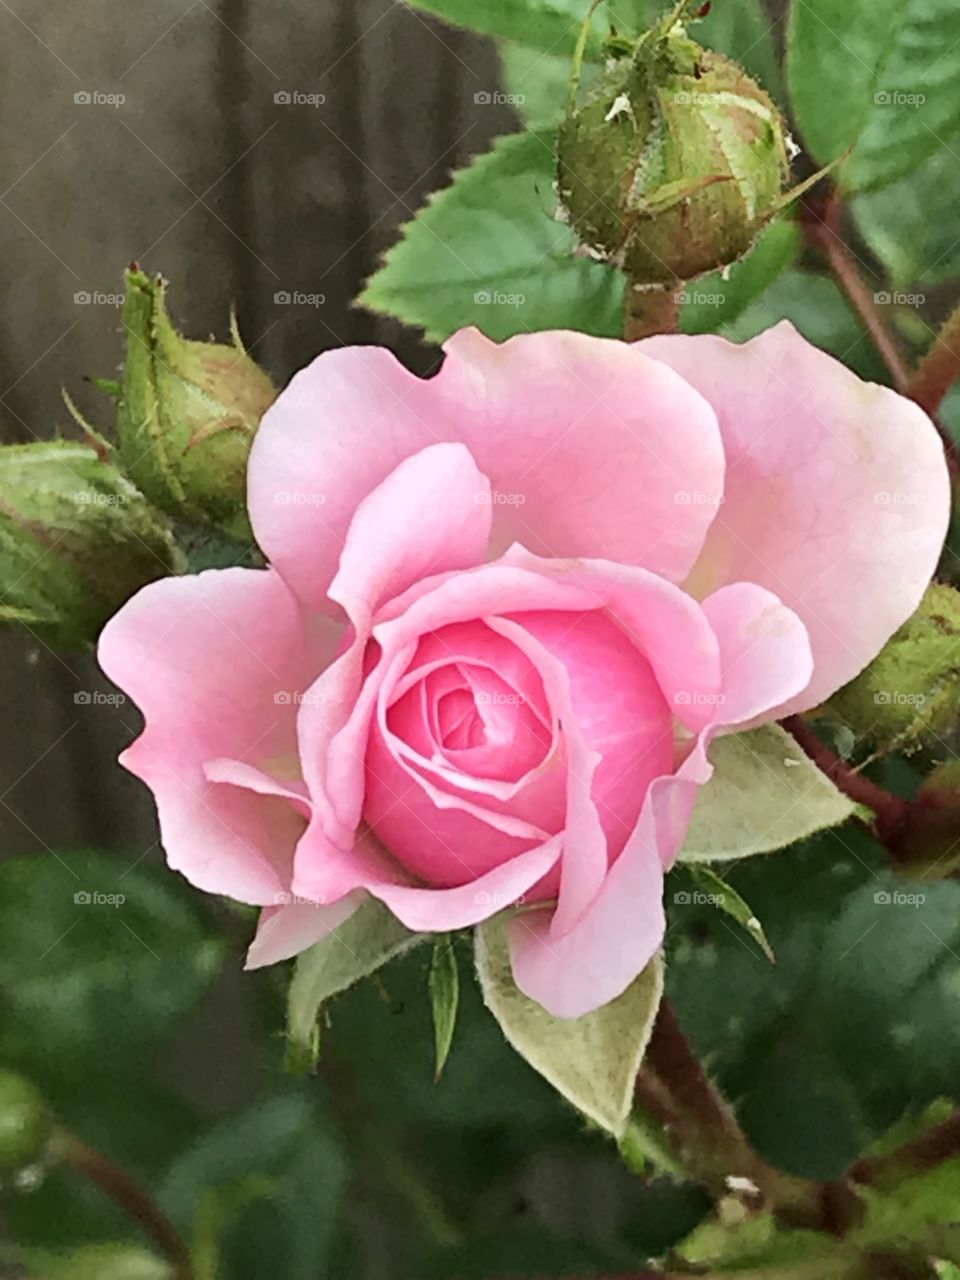 Glorious Mother Nature - a beautiful pink rose bud